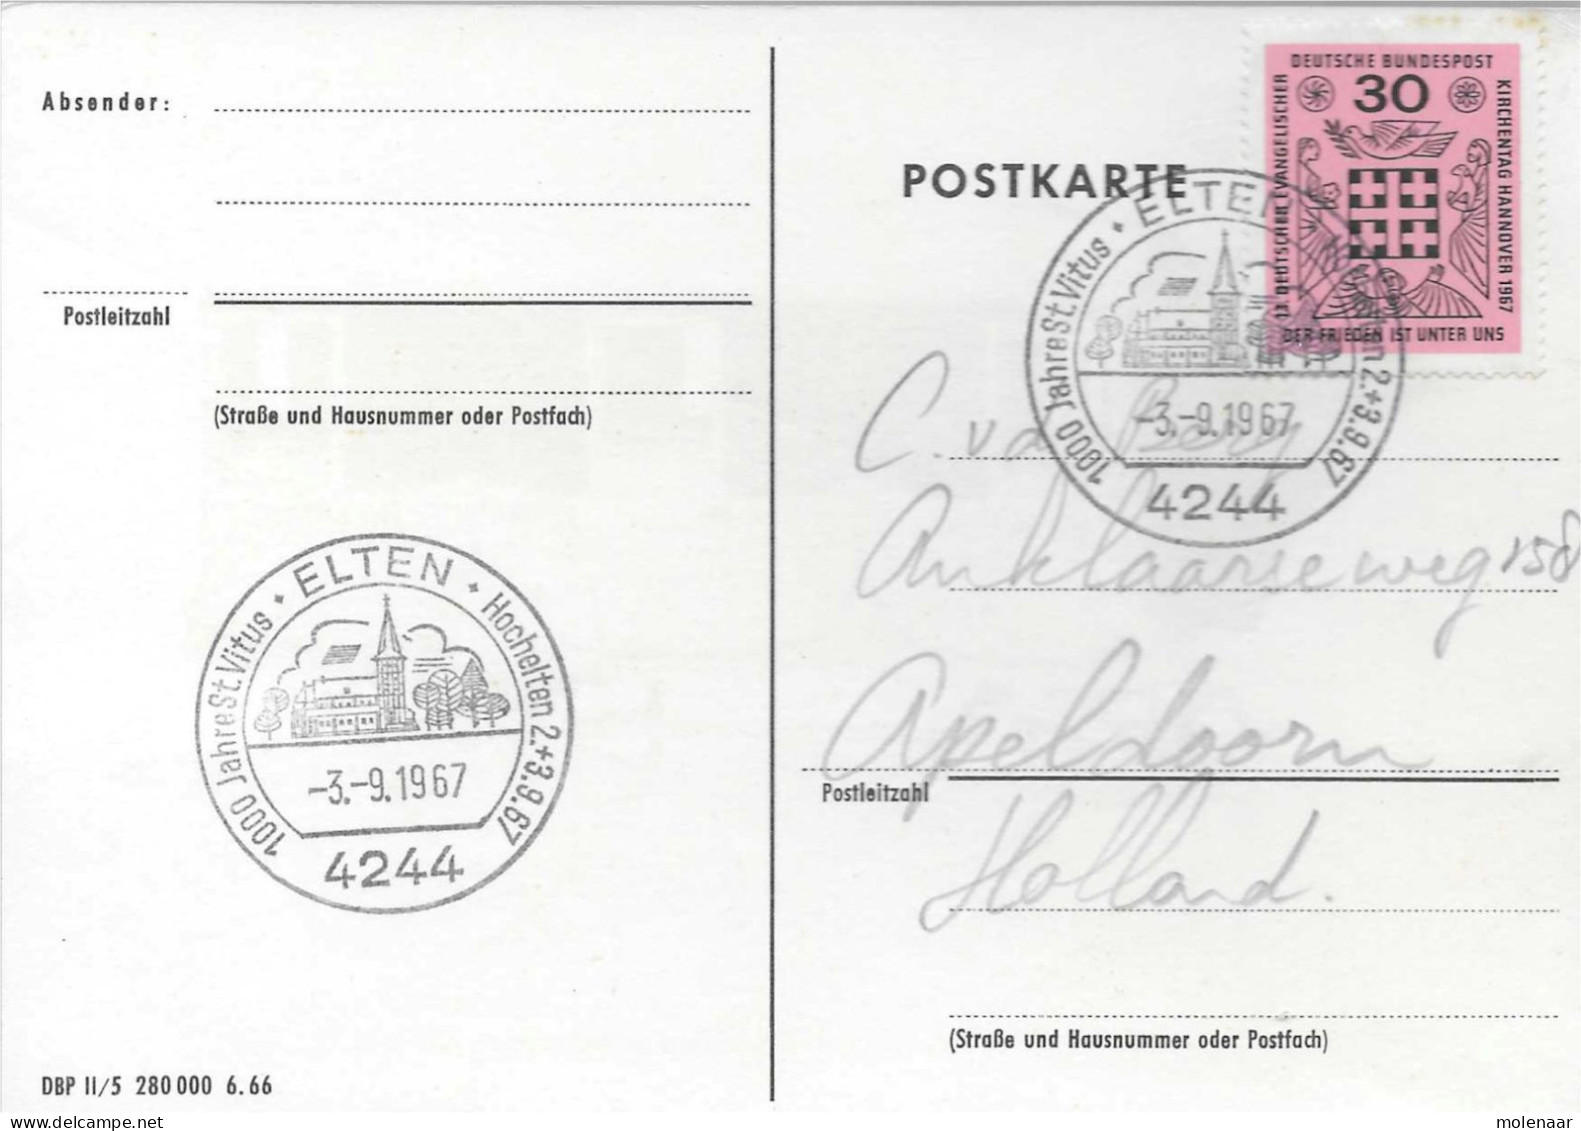 Postzegels > Europa > Duitsland > West-Duitsland > 1960-1969 > Kaart Met No. 536 (17310) - Covers & Documents